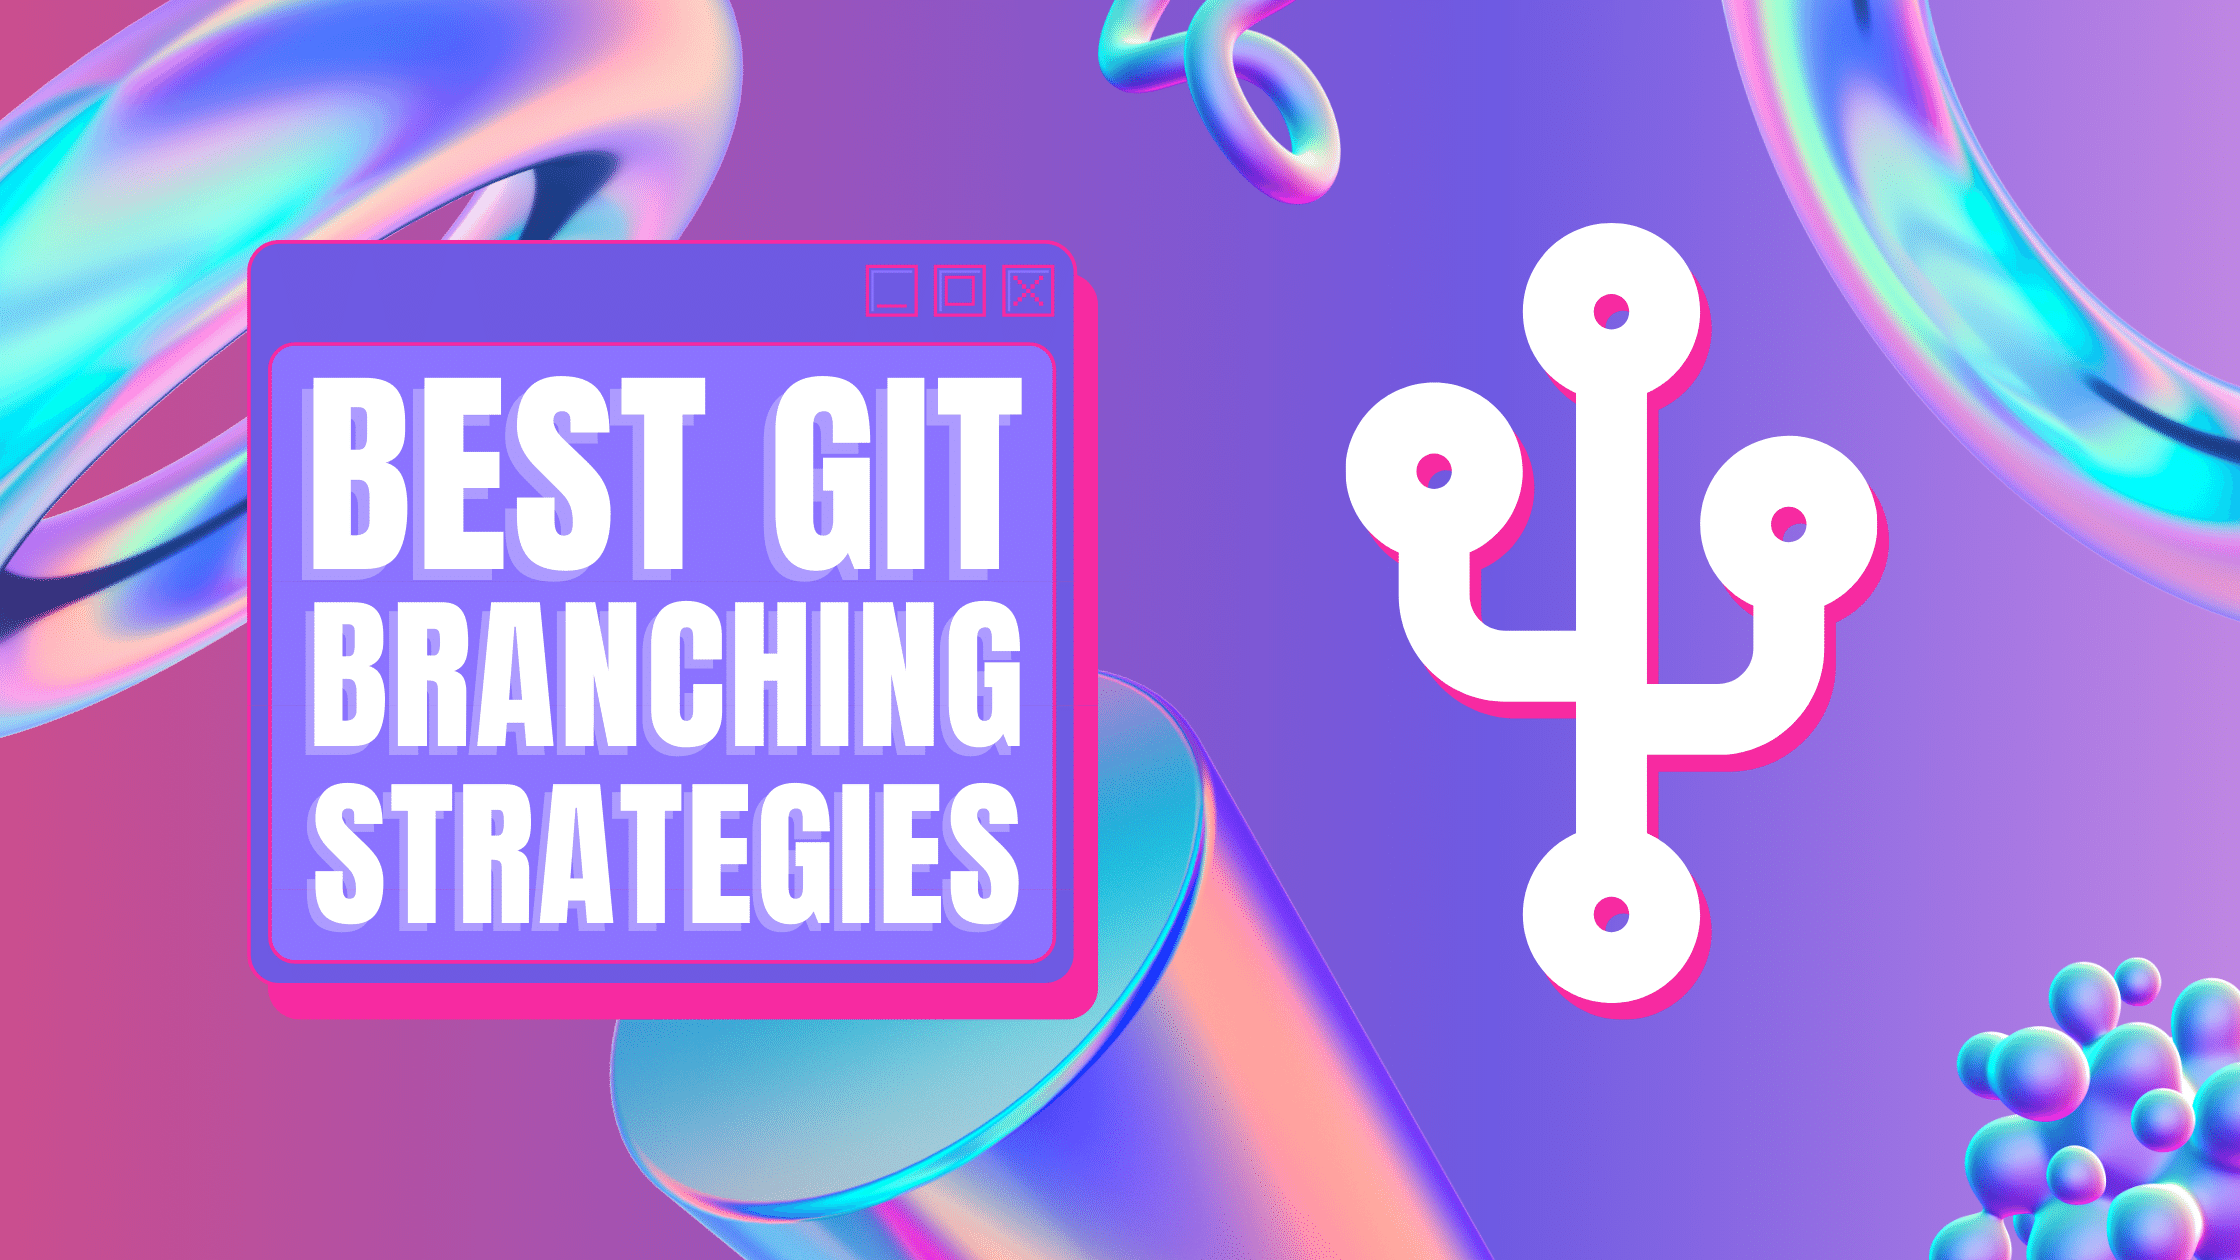 The best Git branching strategies